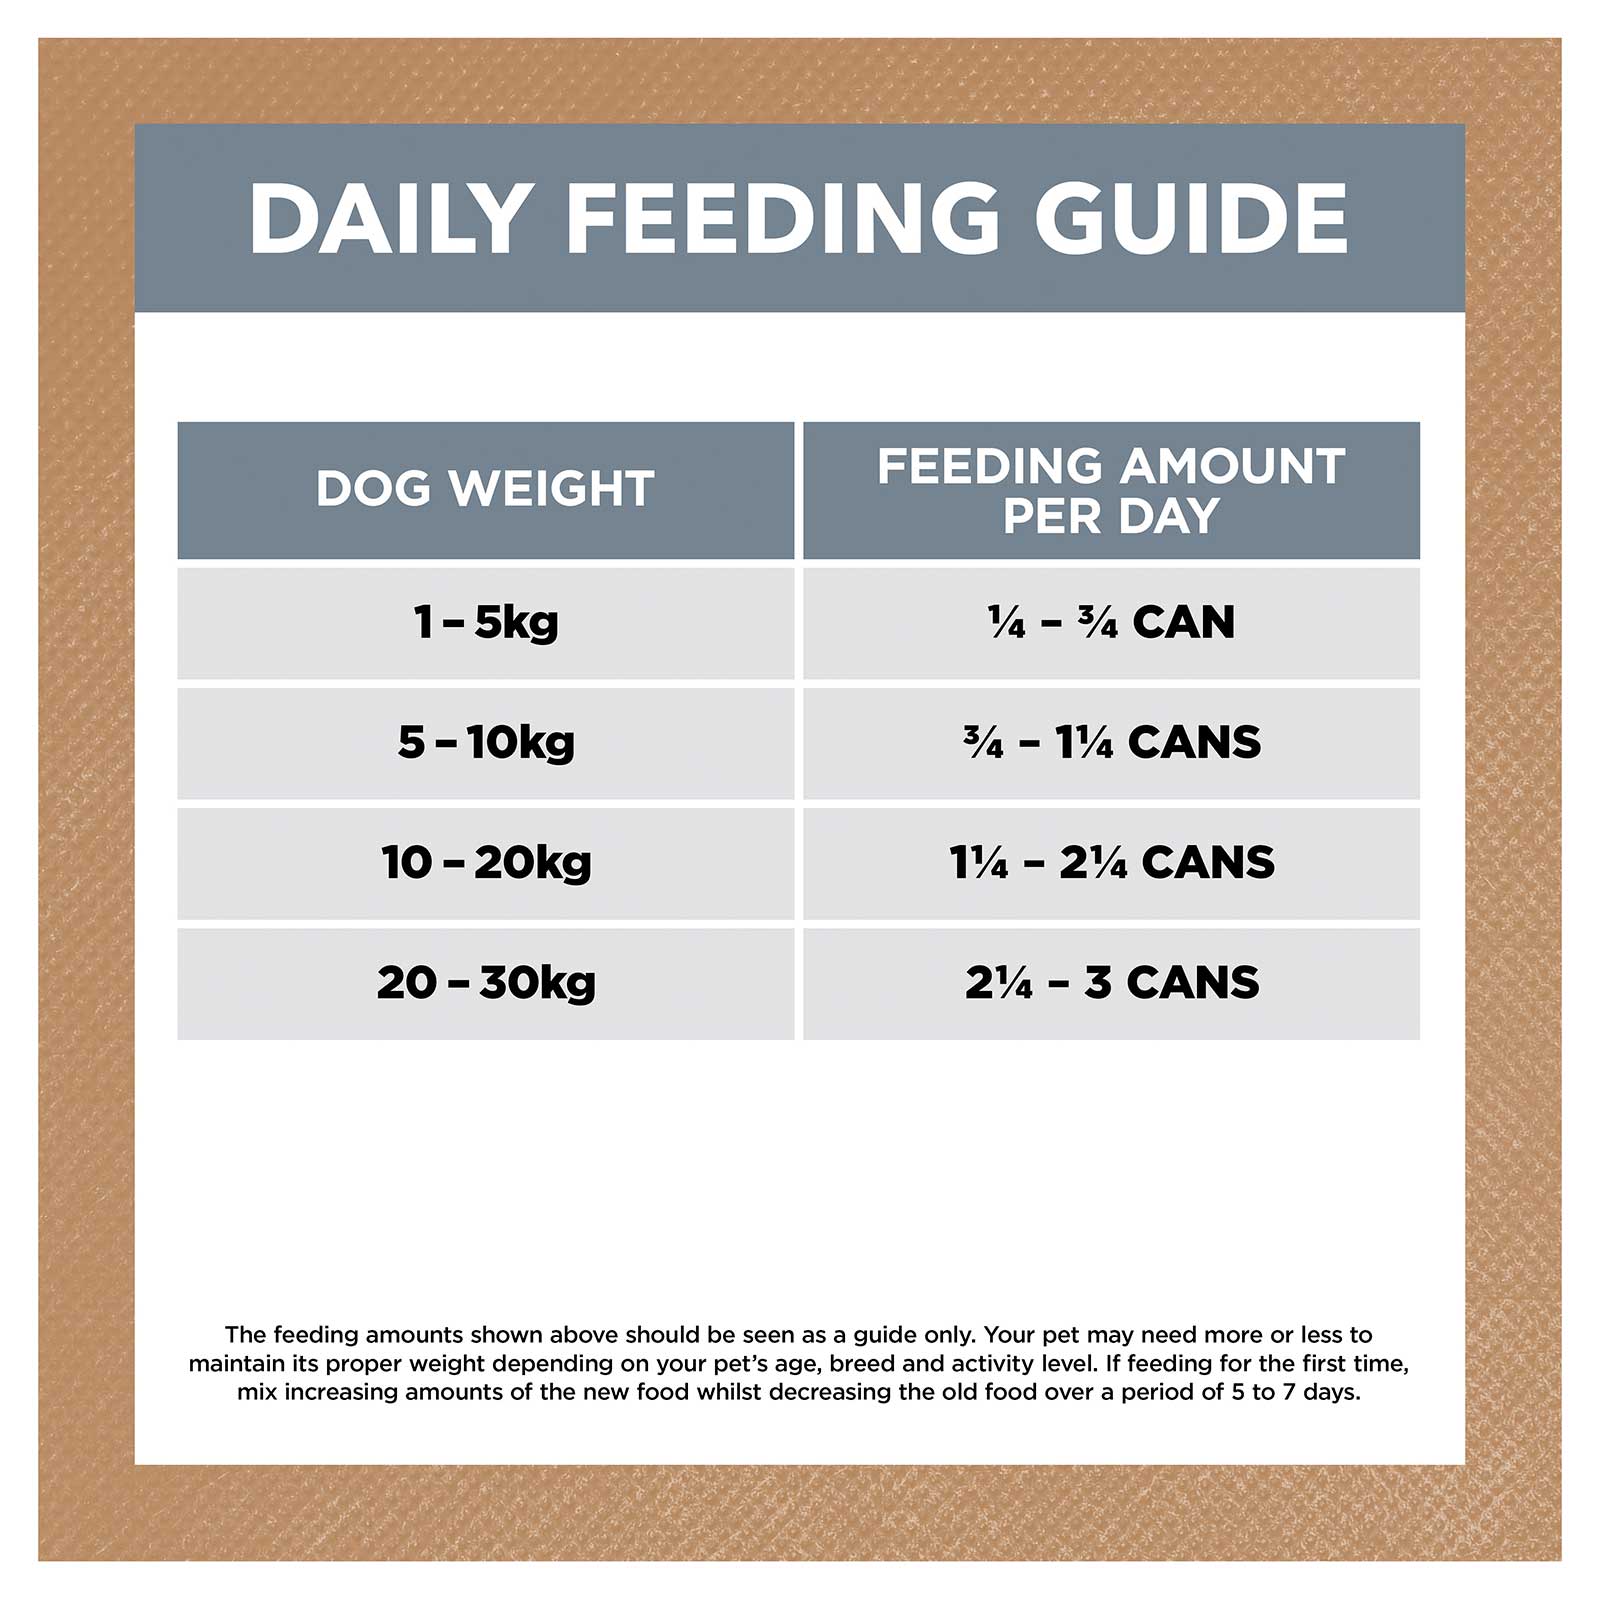 Ivory Coat Grain Free Dog Food Can Adult Lamb & Sardine Stew